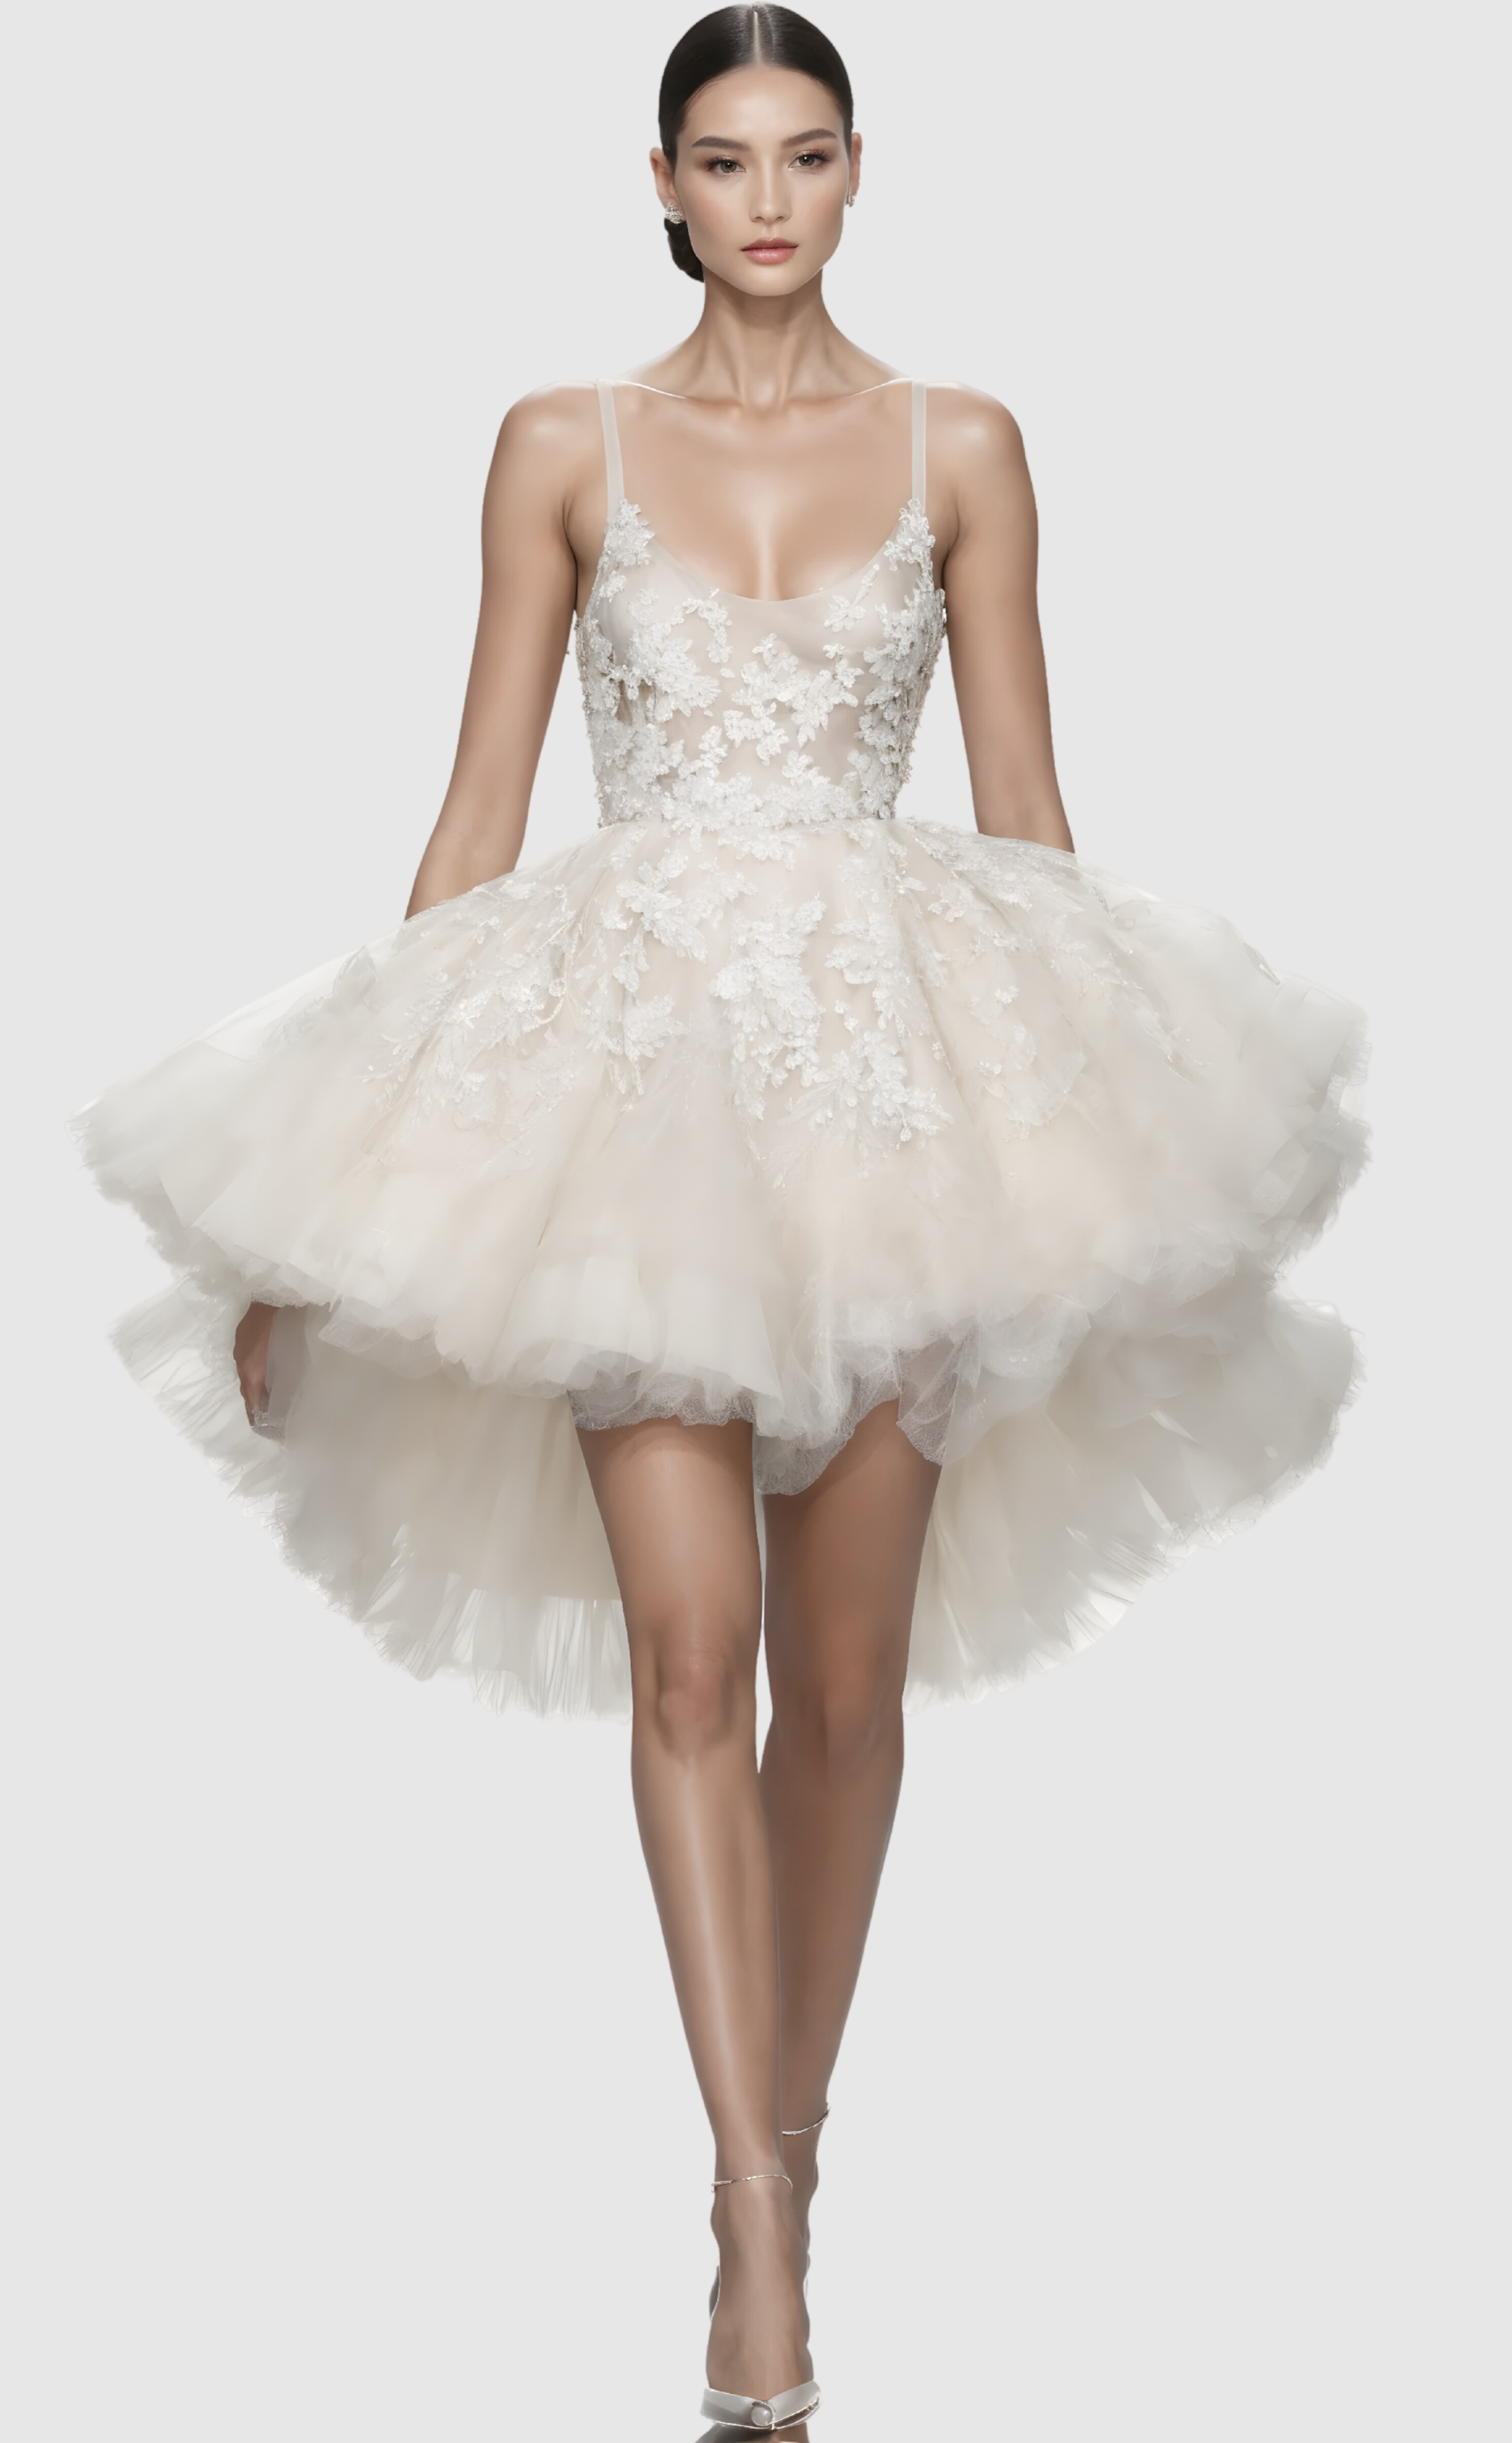 Bridal tulle dress